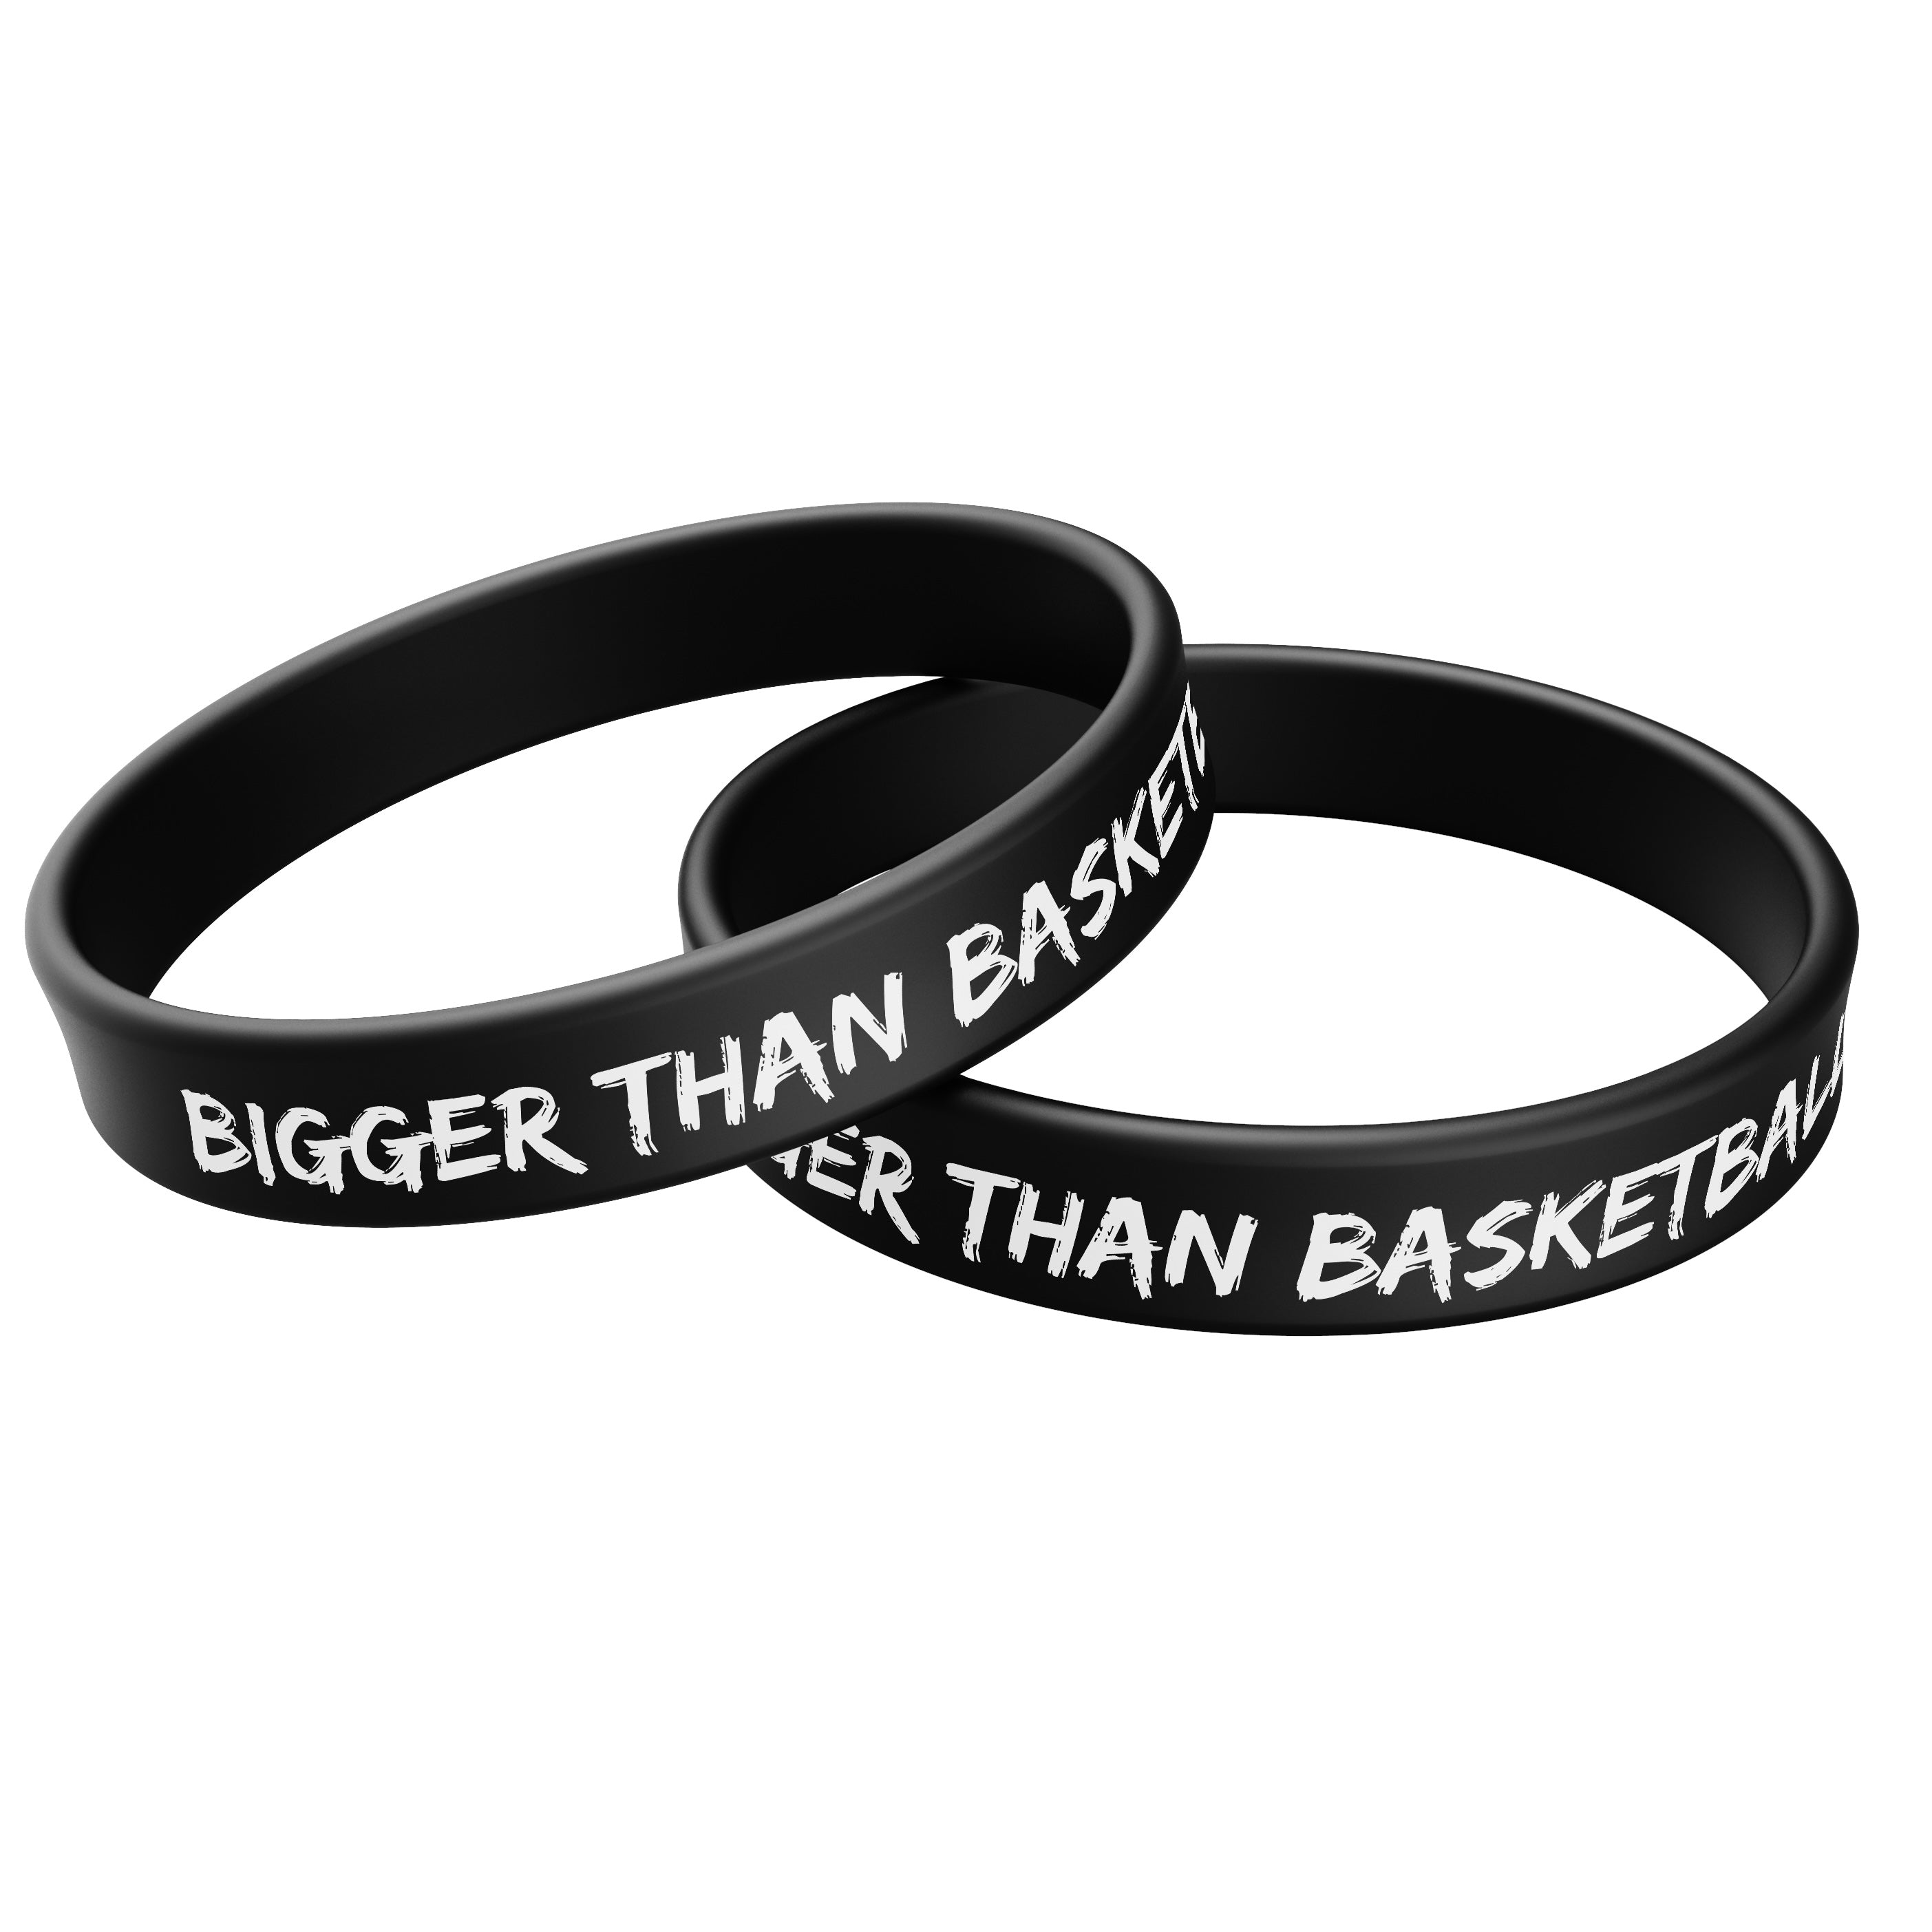 Bigger Than Basketball - Wristband - Black